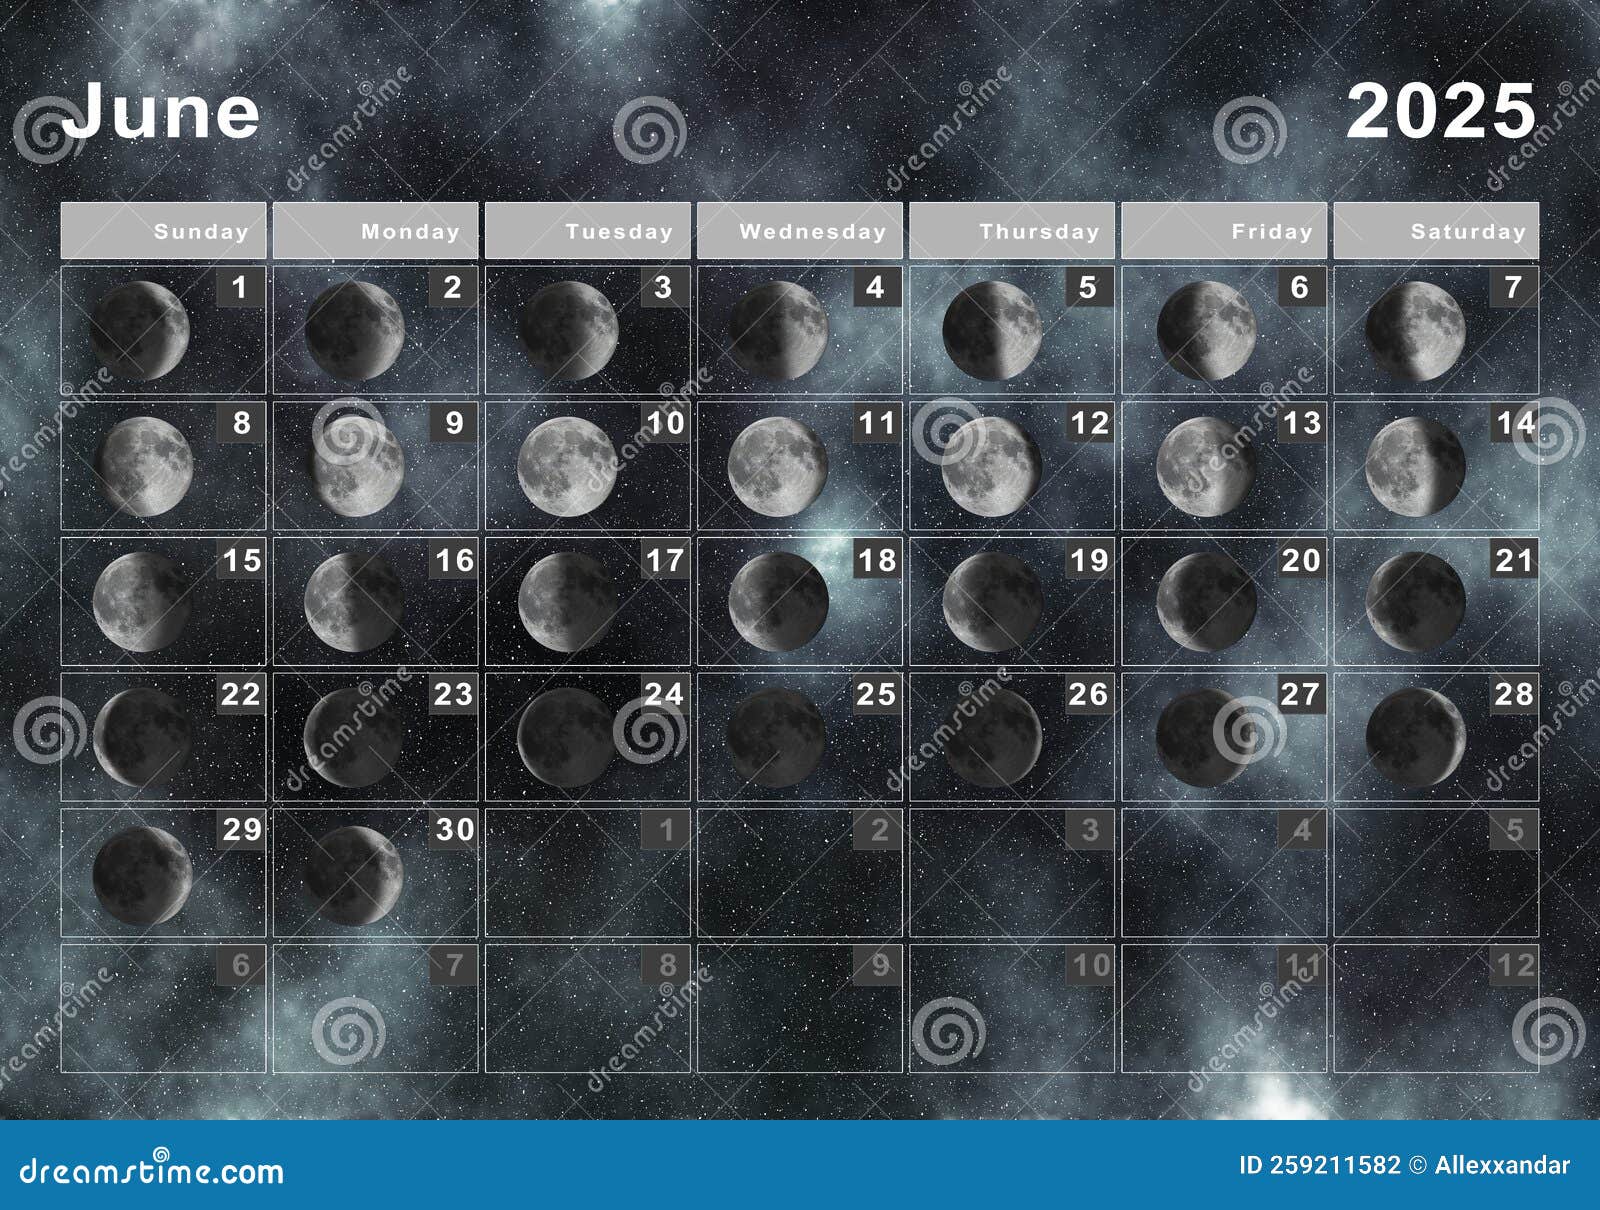 June 2025 Lunar Calendar, Moon Cycles Stock Illustration - Illustration ...